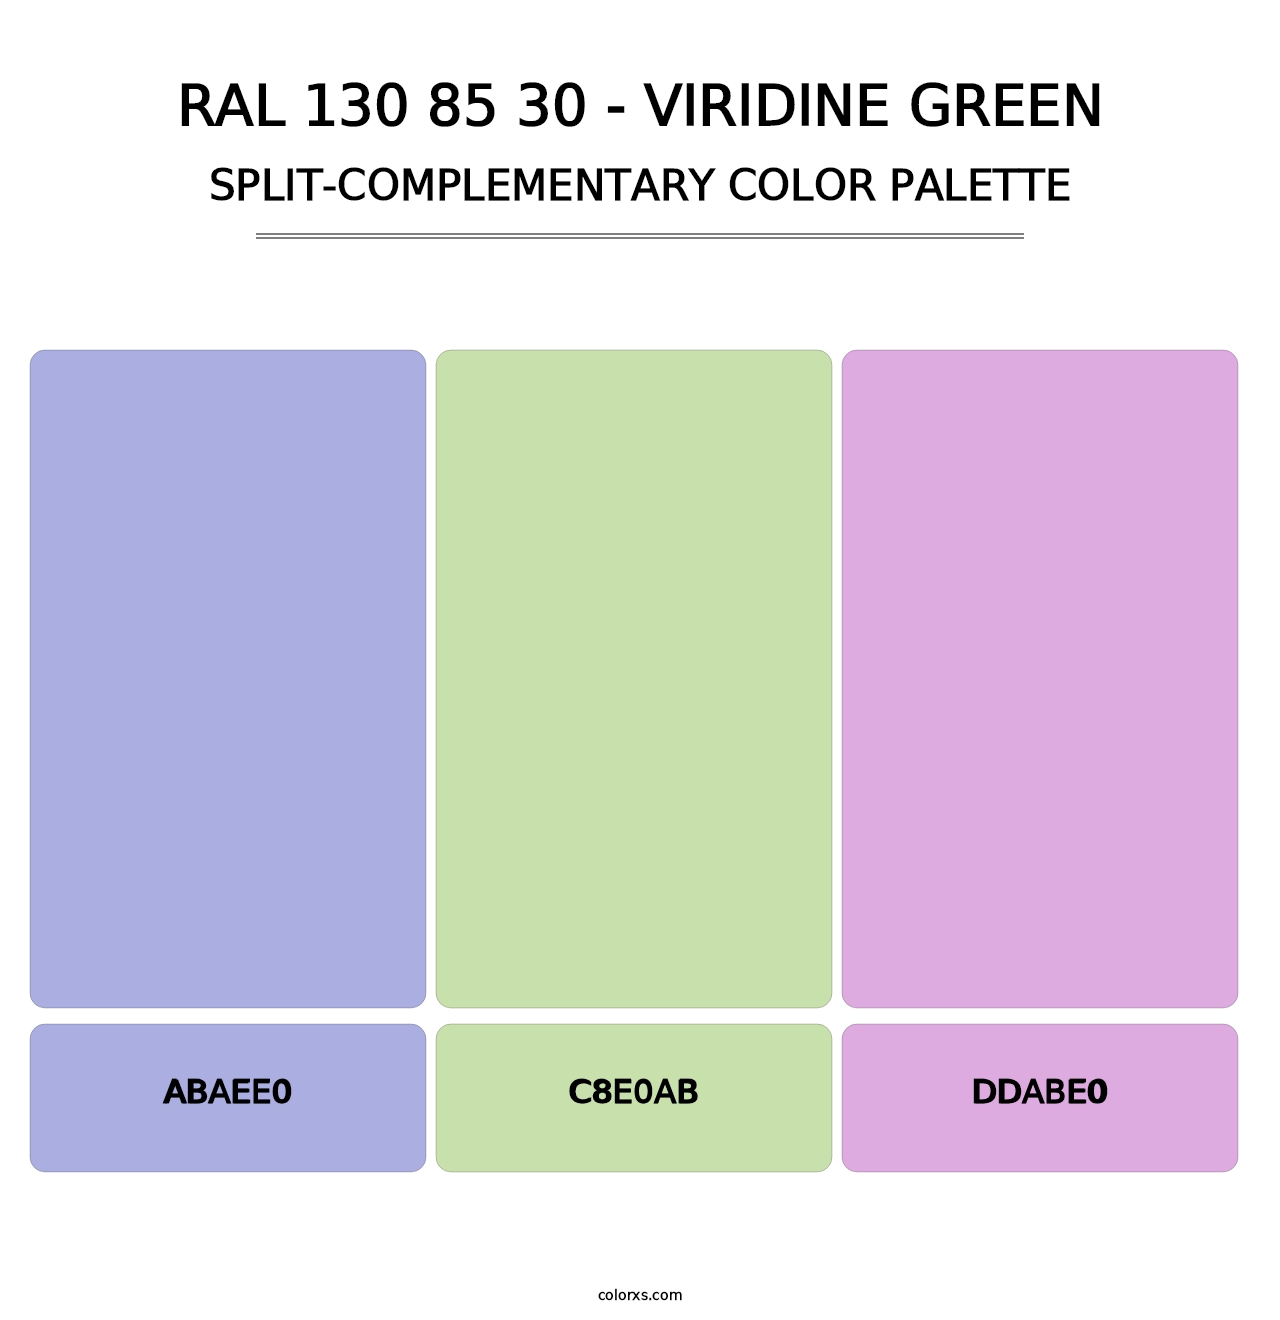 RAL 130 85 30 - Viridine Green - Split-Complementary Color Palette